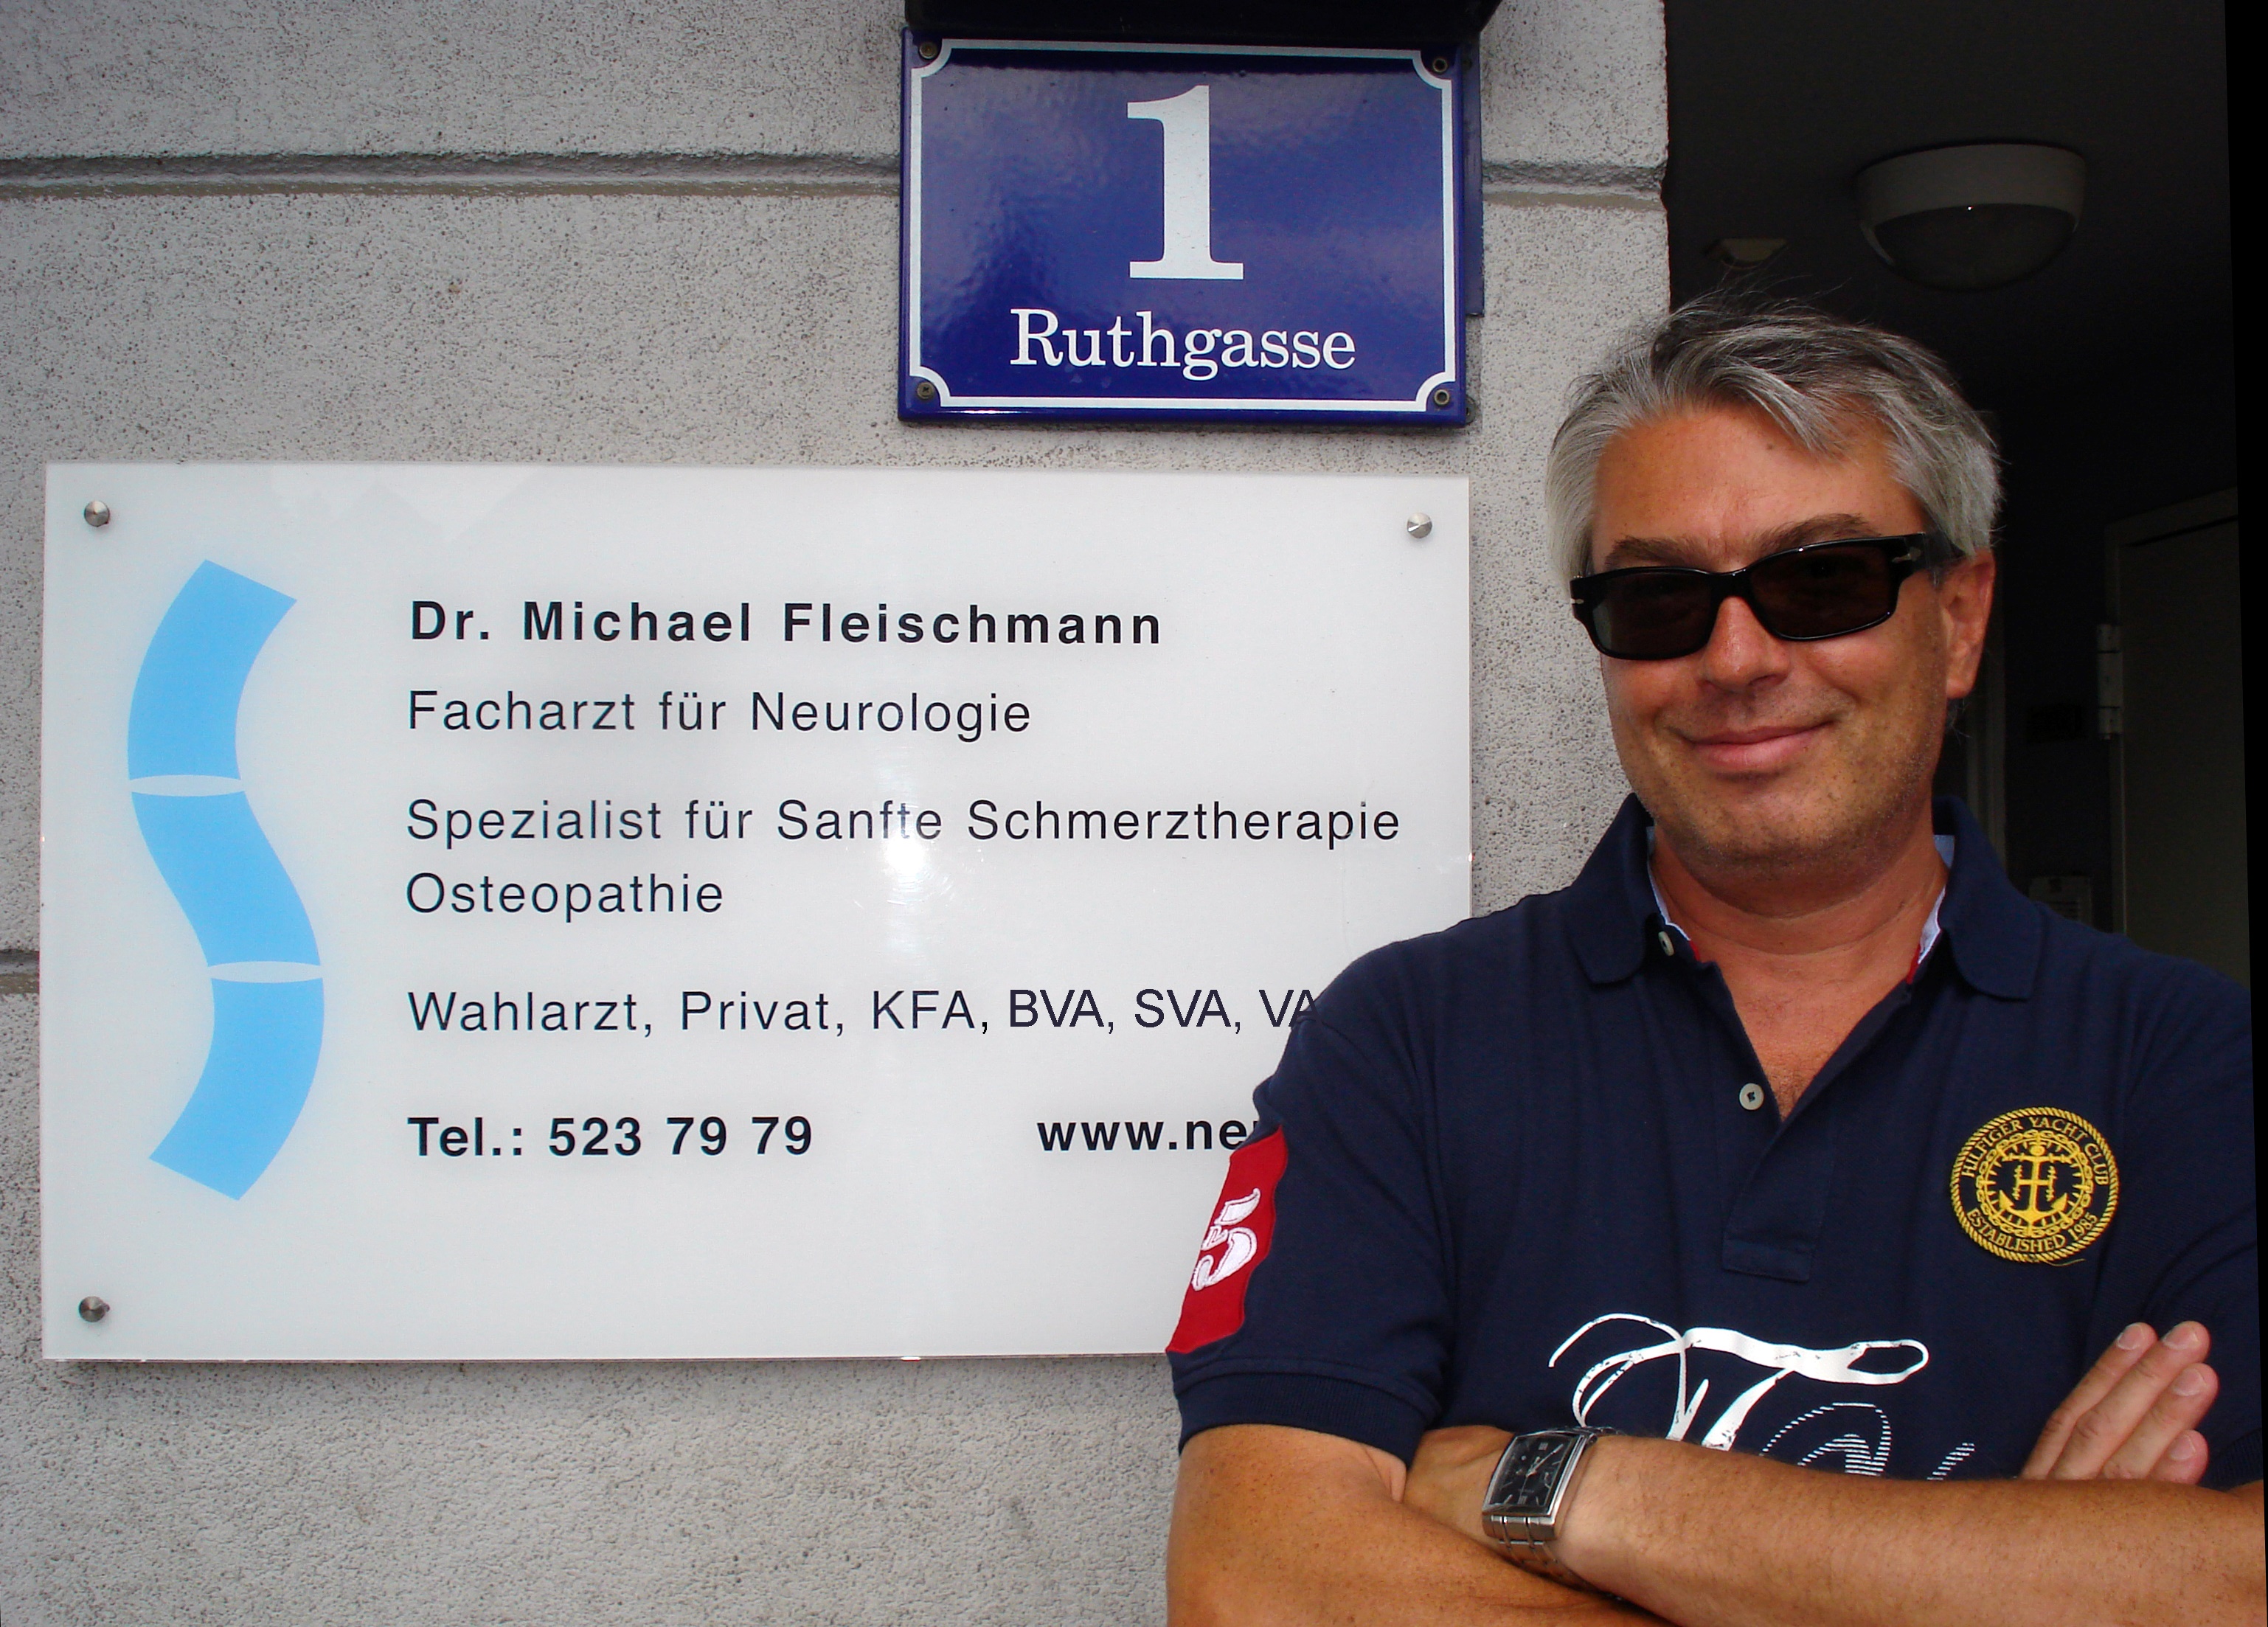 Dr. Michael Fleischmann